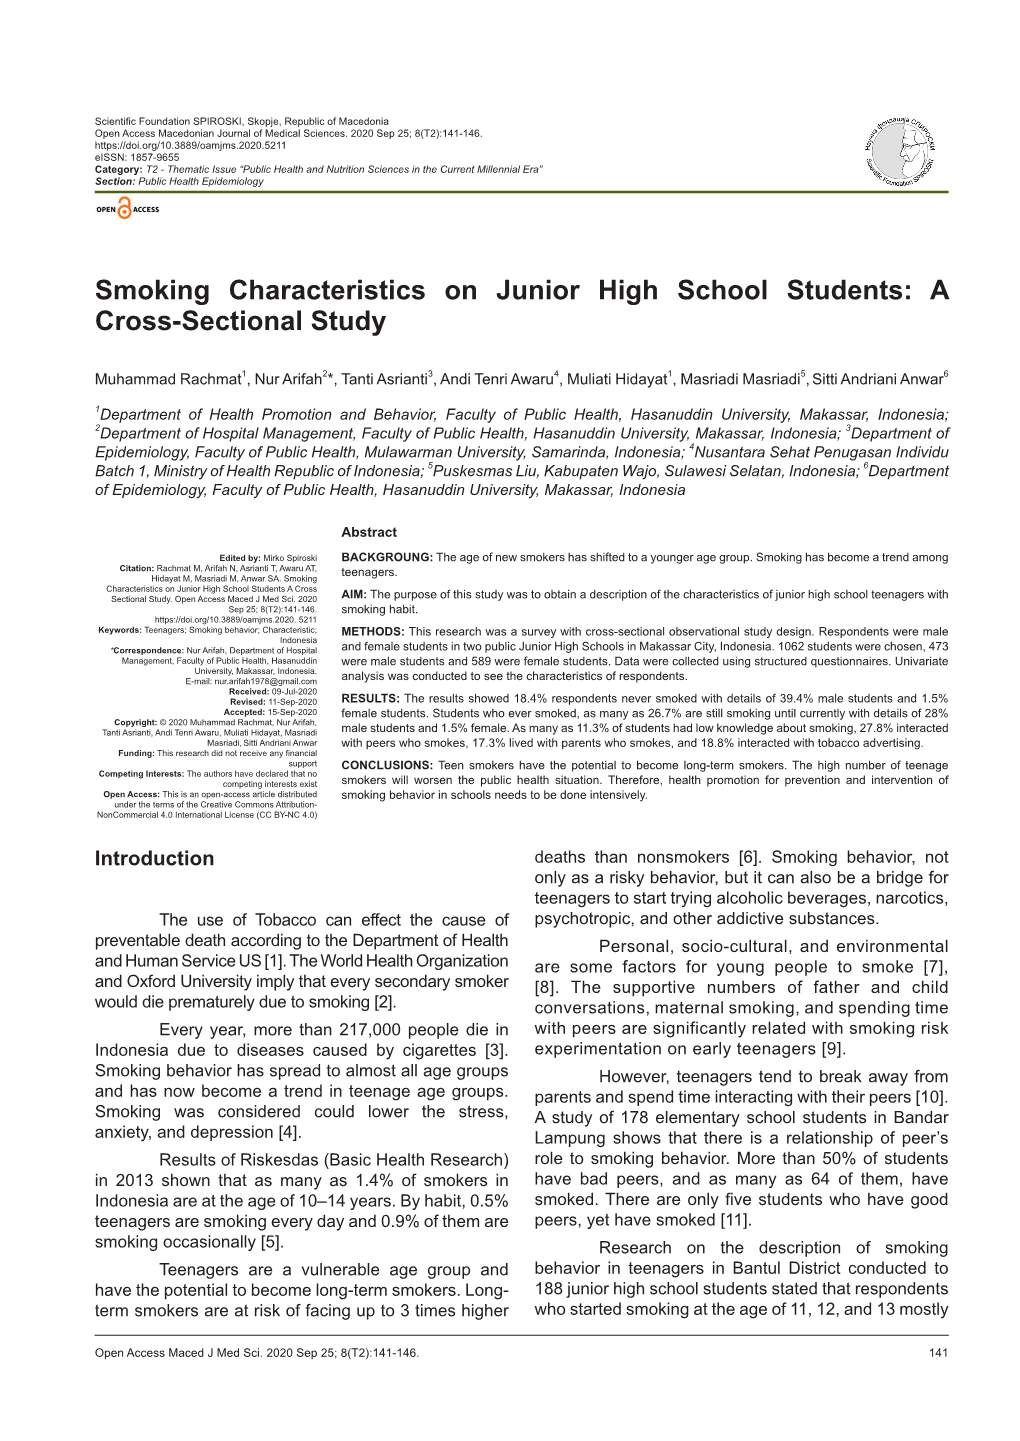 Smoking Characteristics on Junior High School Students: a Cross-Sectional Study